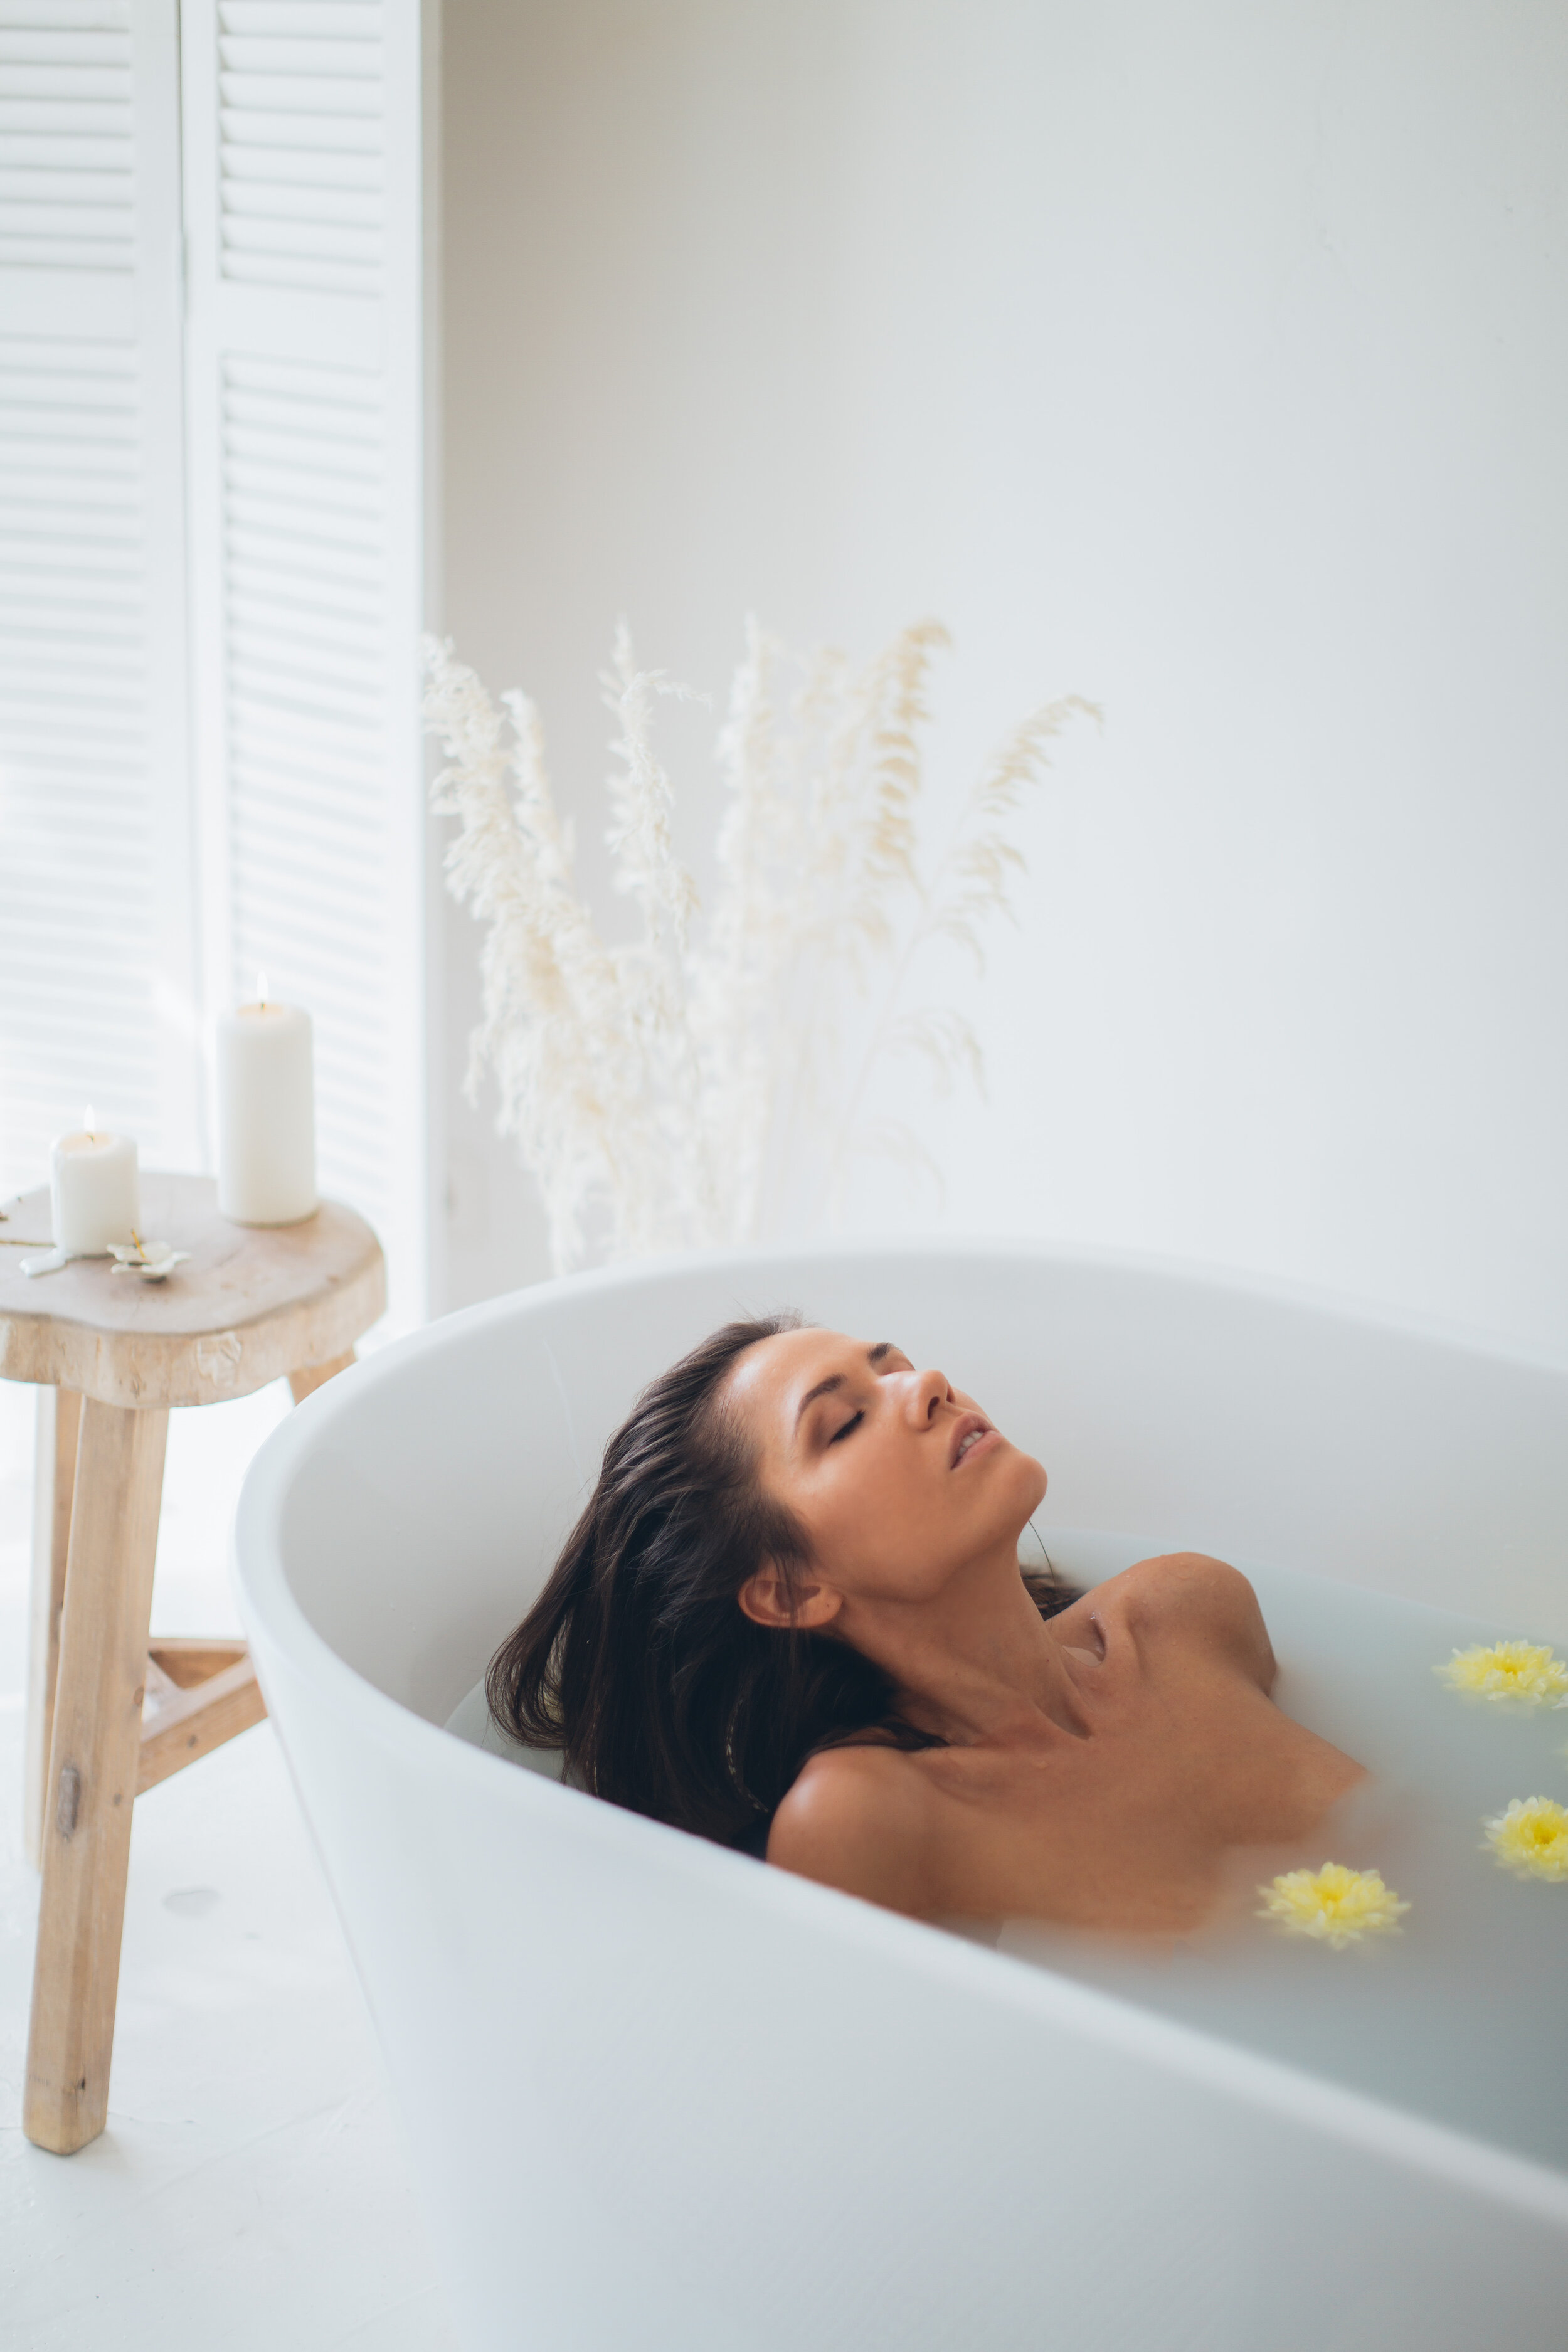 Canva - Woman Lying in Bathtub With Water.jpg